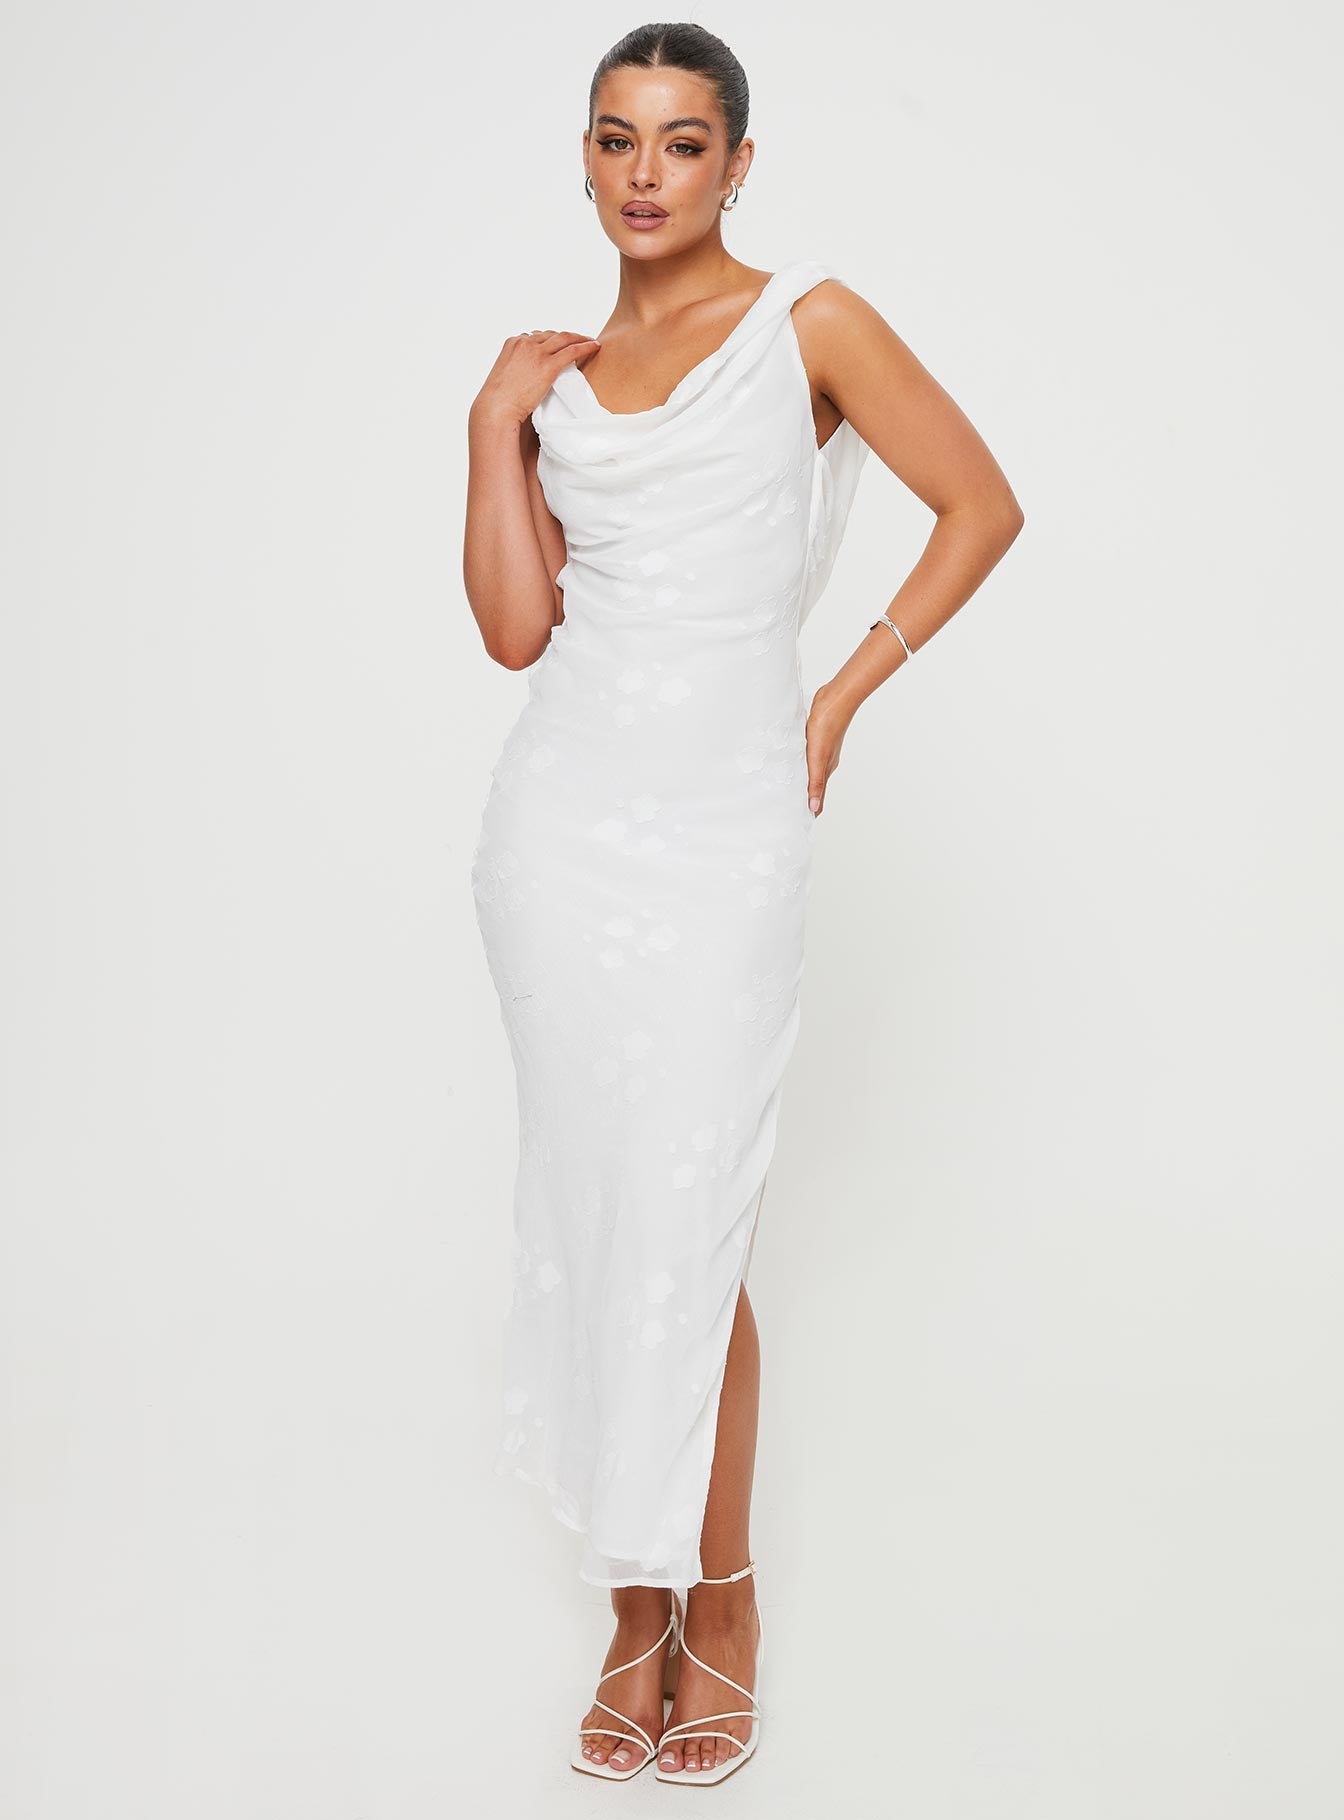 Shop Formal Dress - Contessa Maxi Dress White fifth image